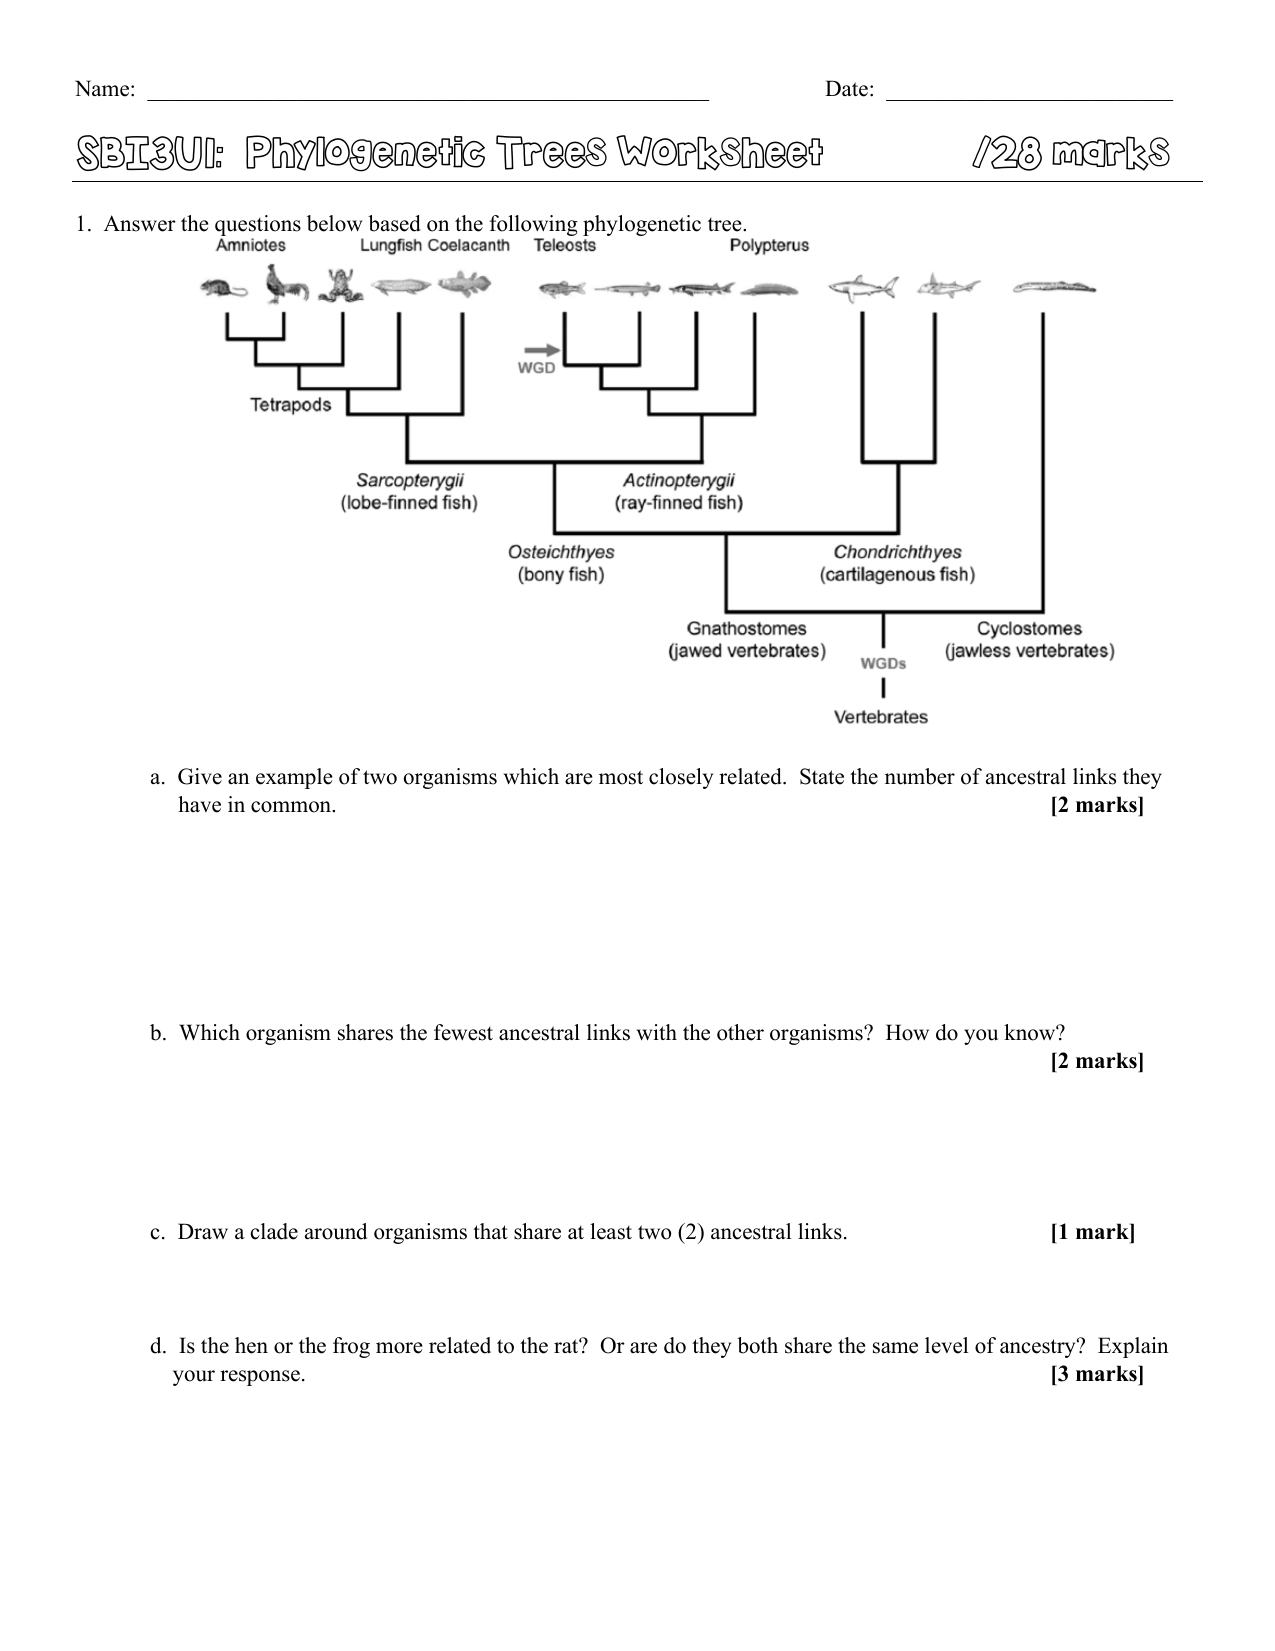 phylogenetic-tree-worksheet-sustainablefed